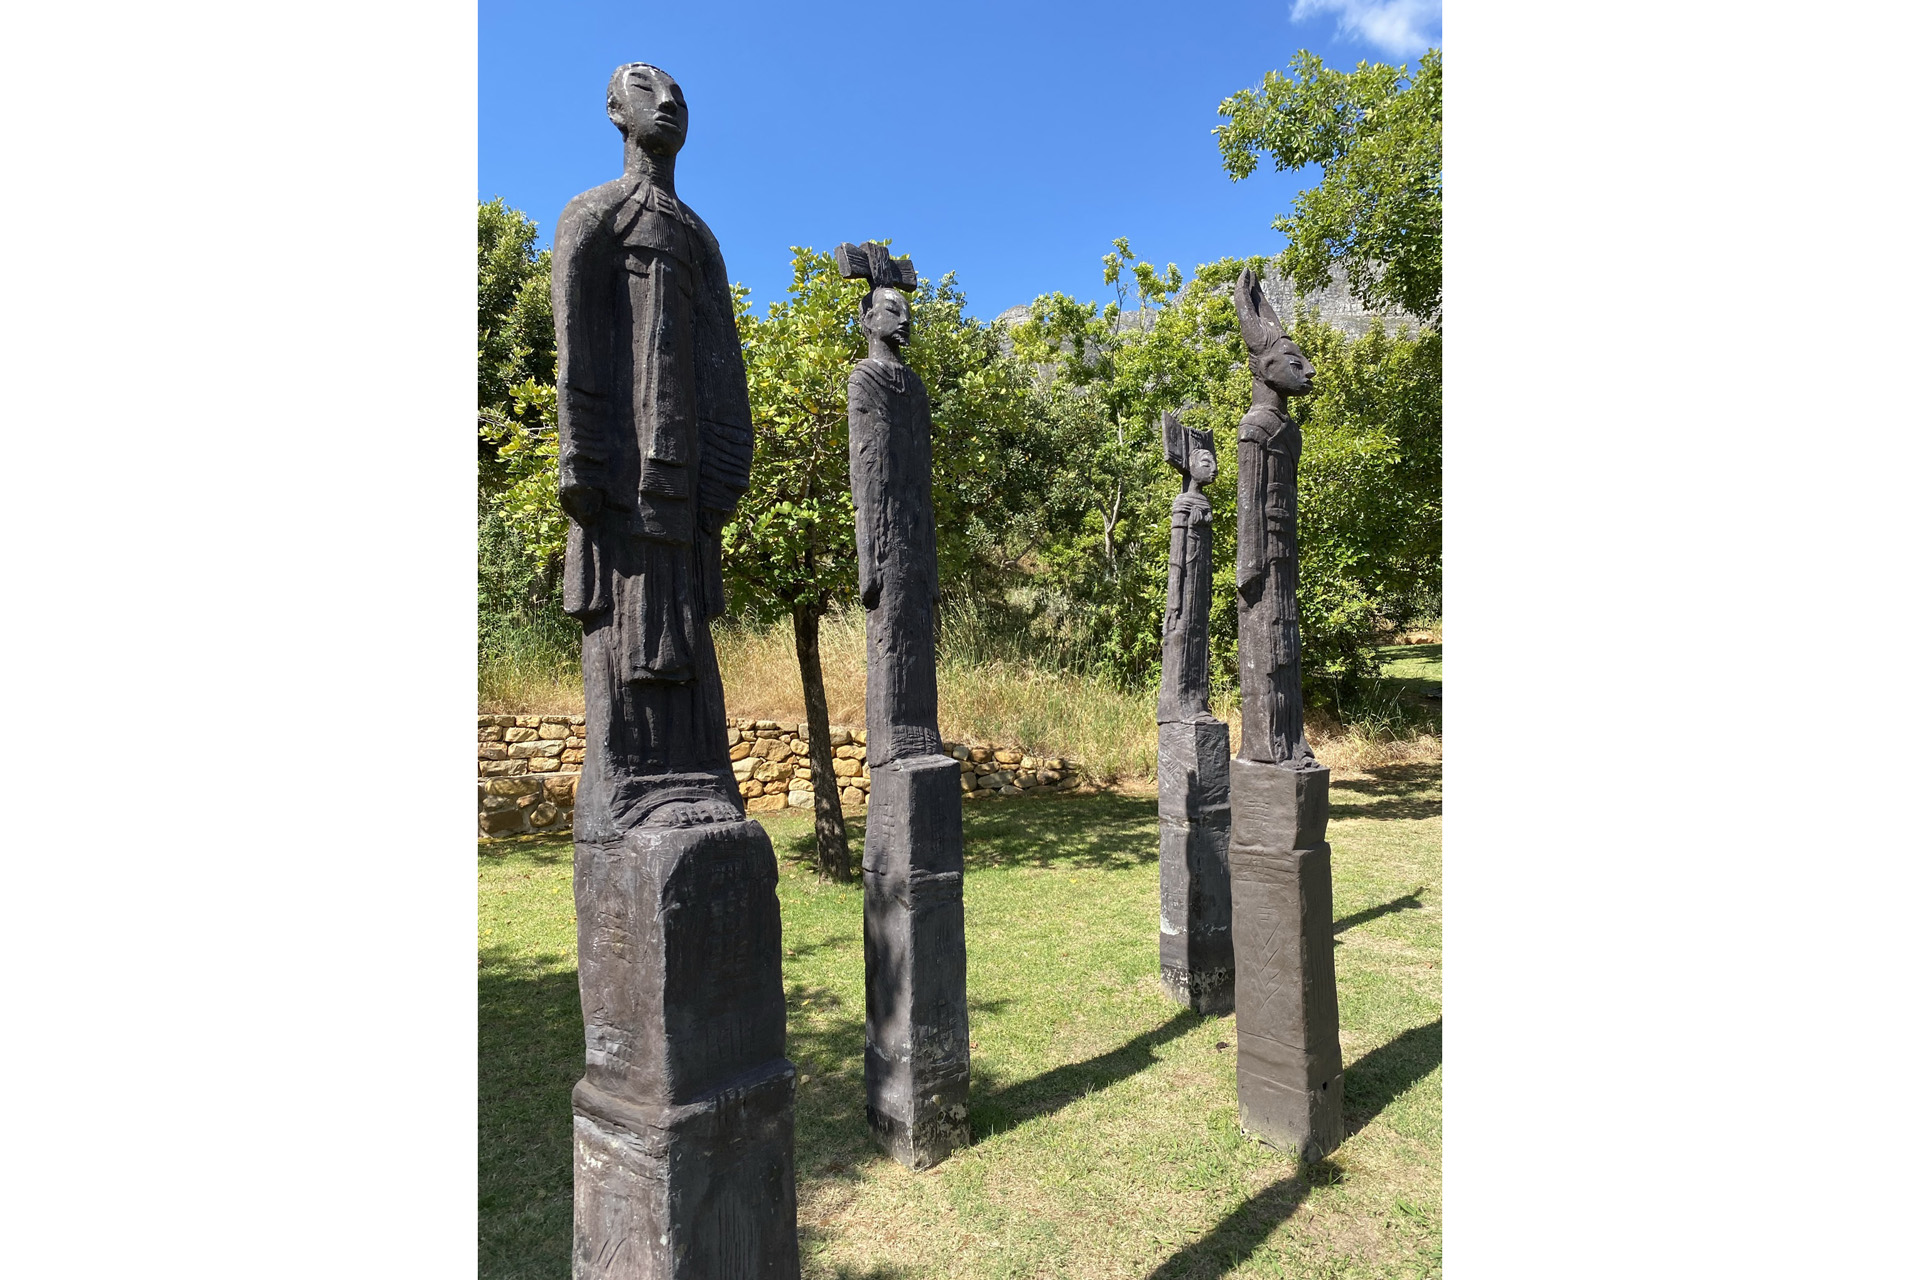 statues in a sculpture park